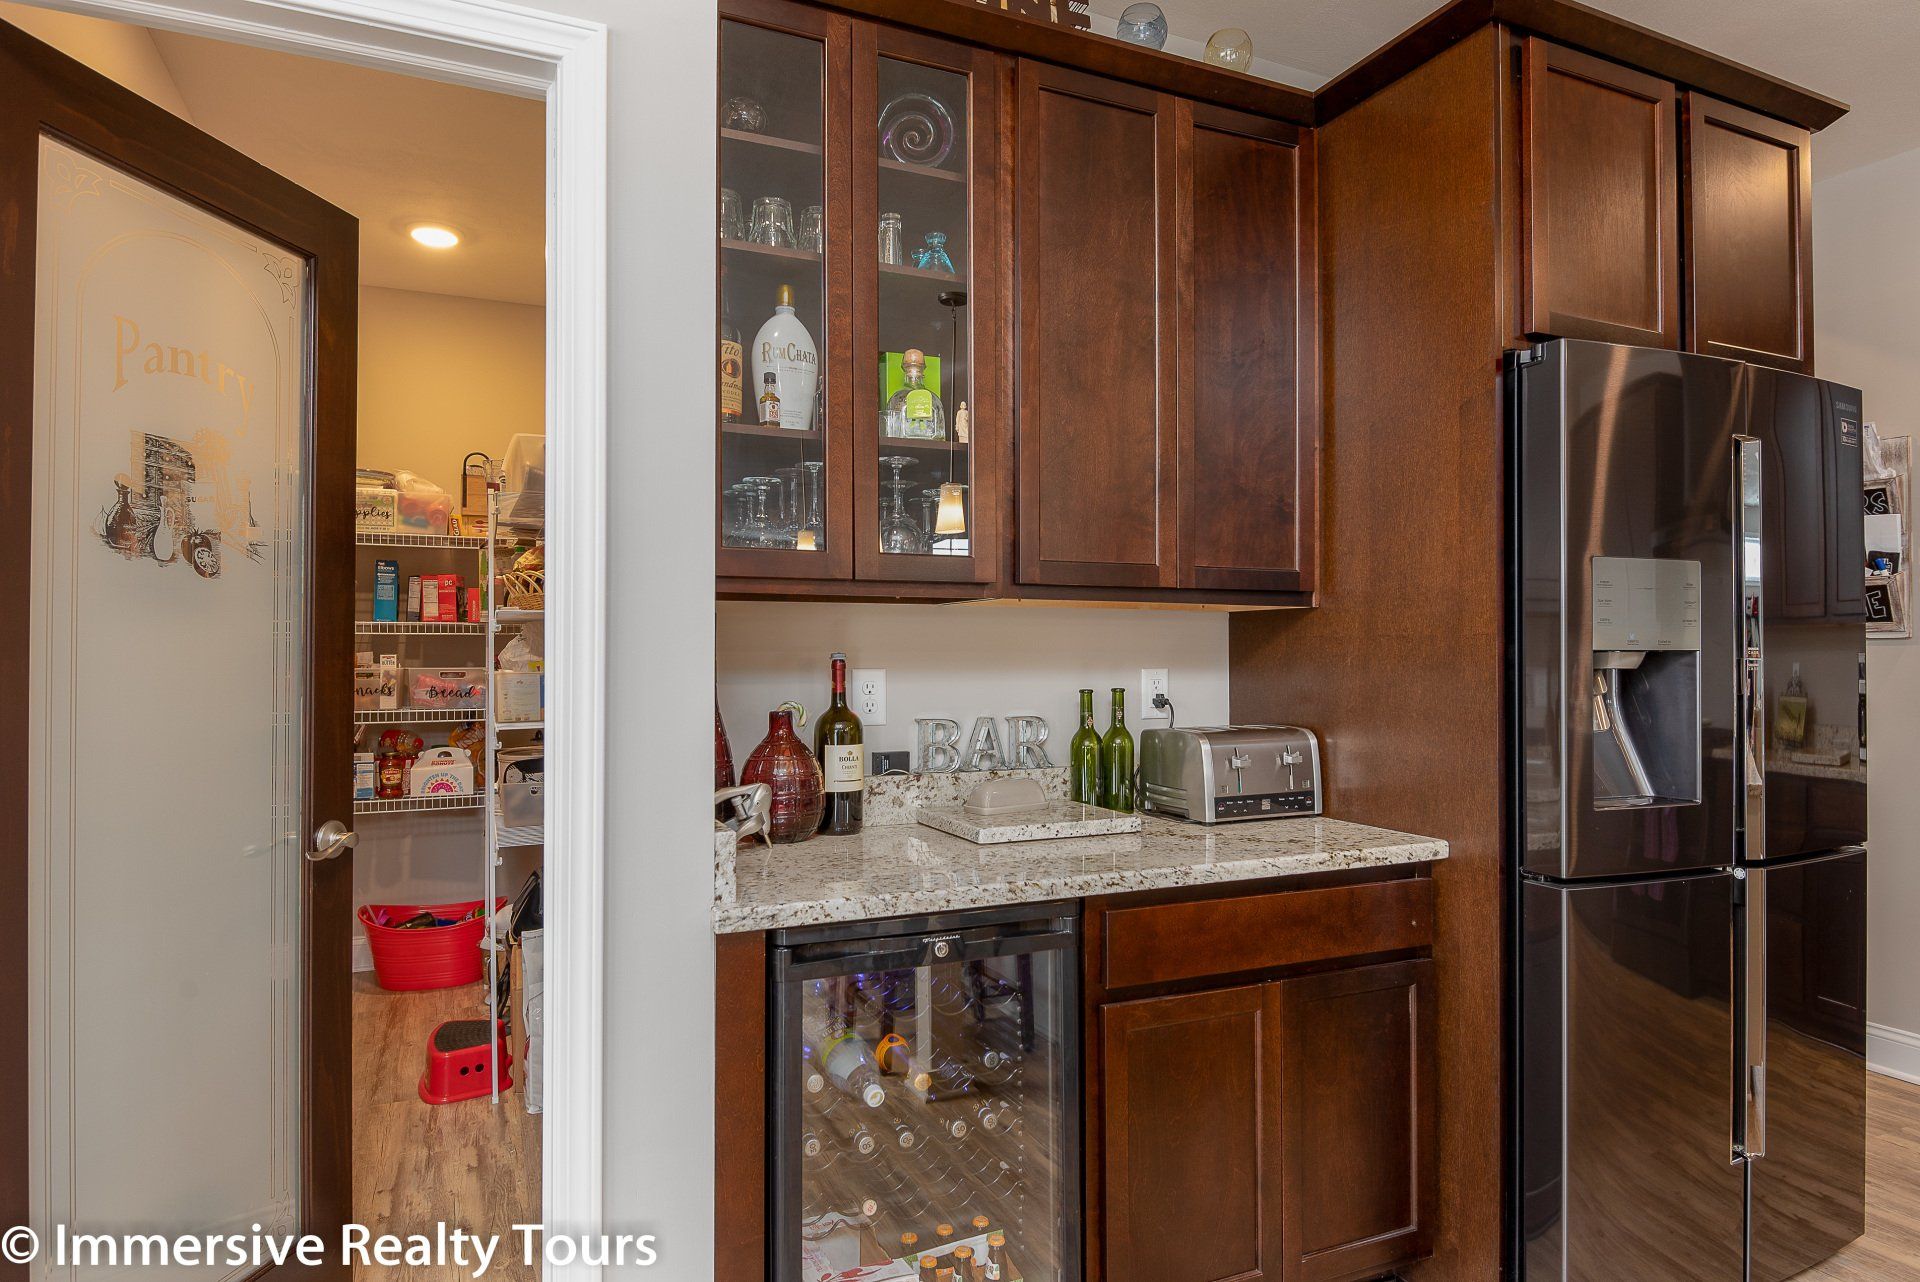 Bar and wine fridge in kitchen